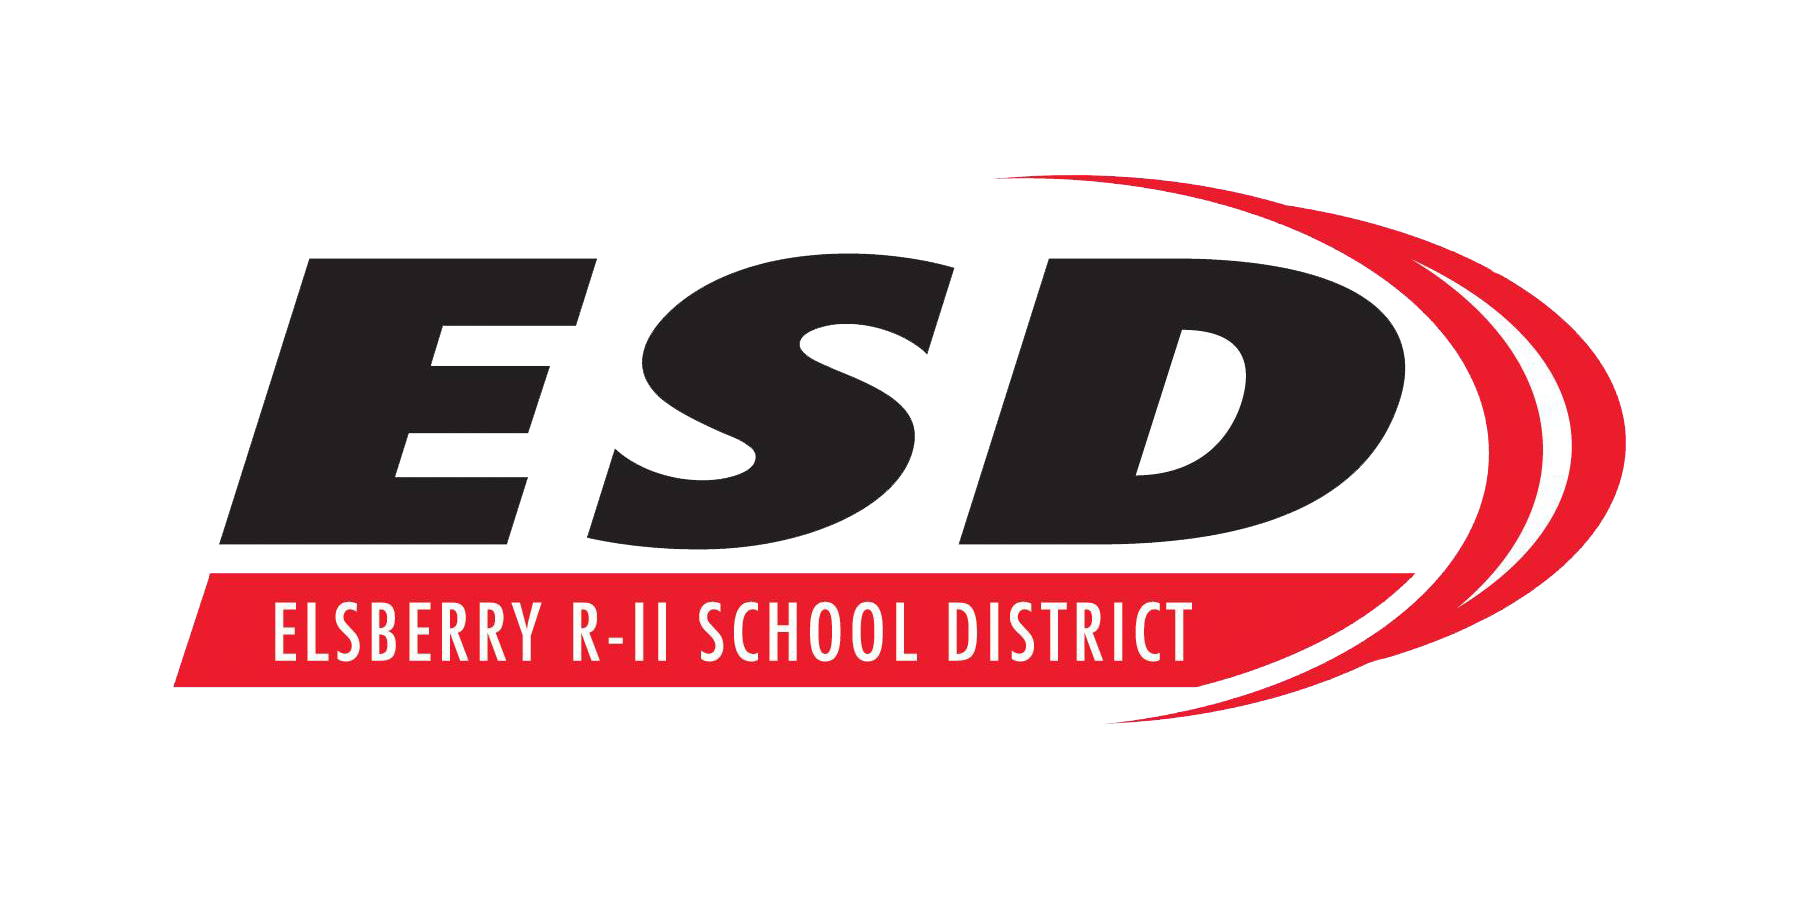 Elsberry R-II School District